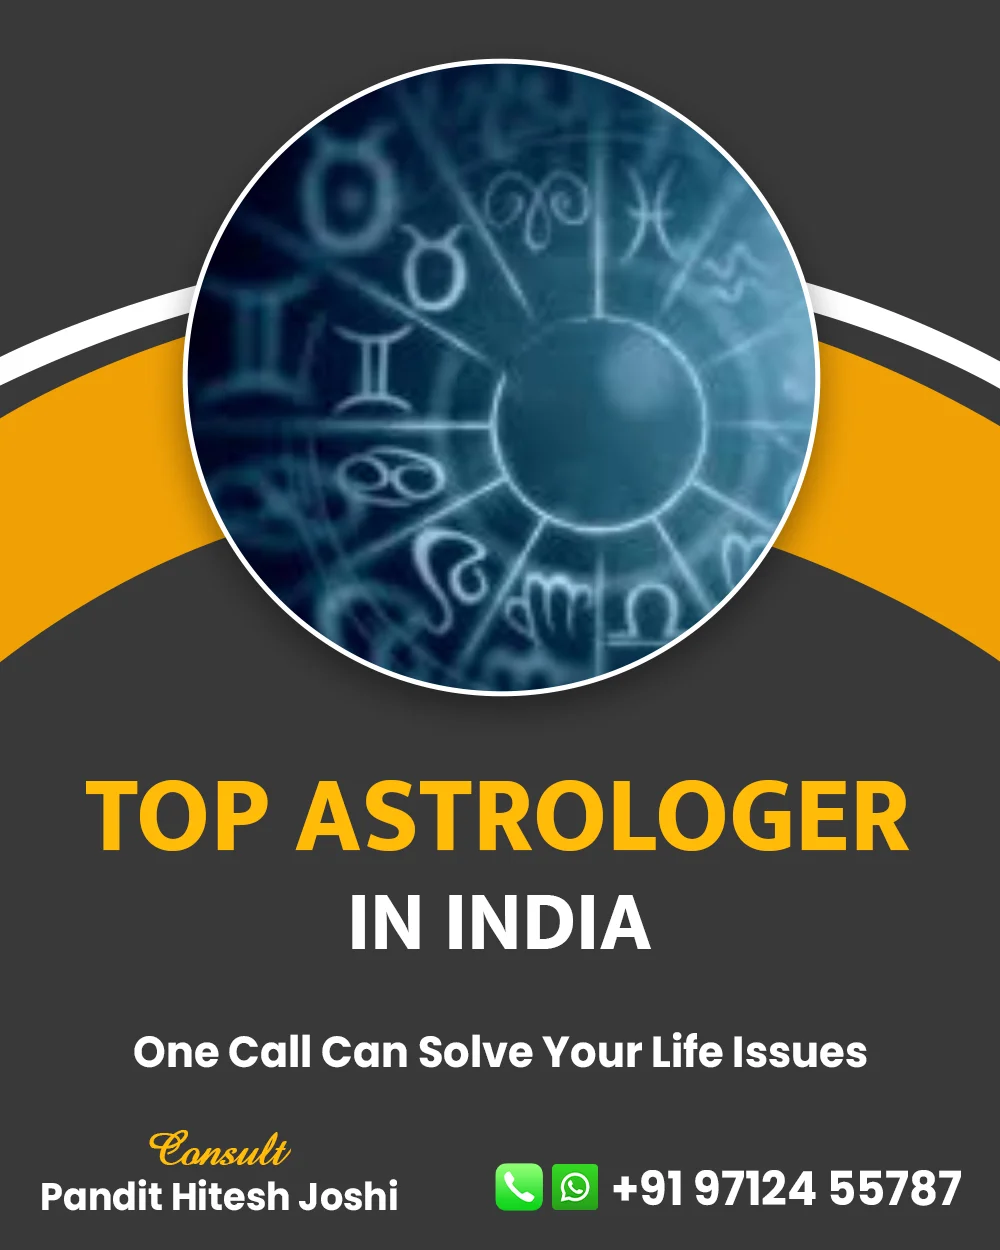 Best Astrologer in Bharuch